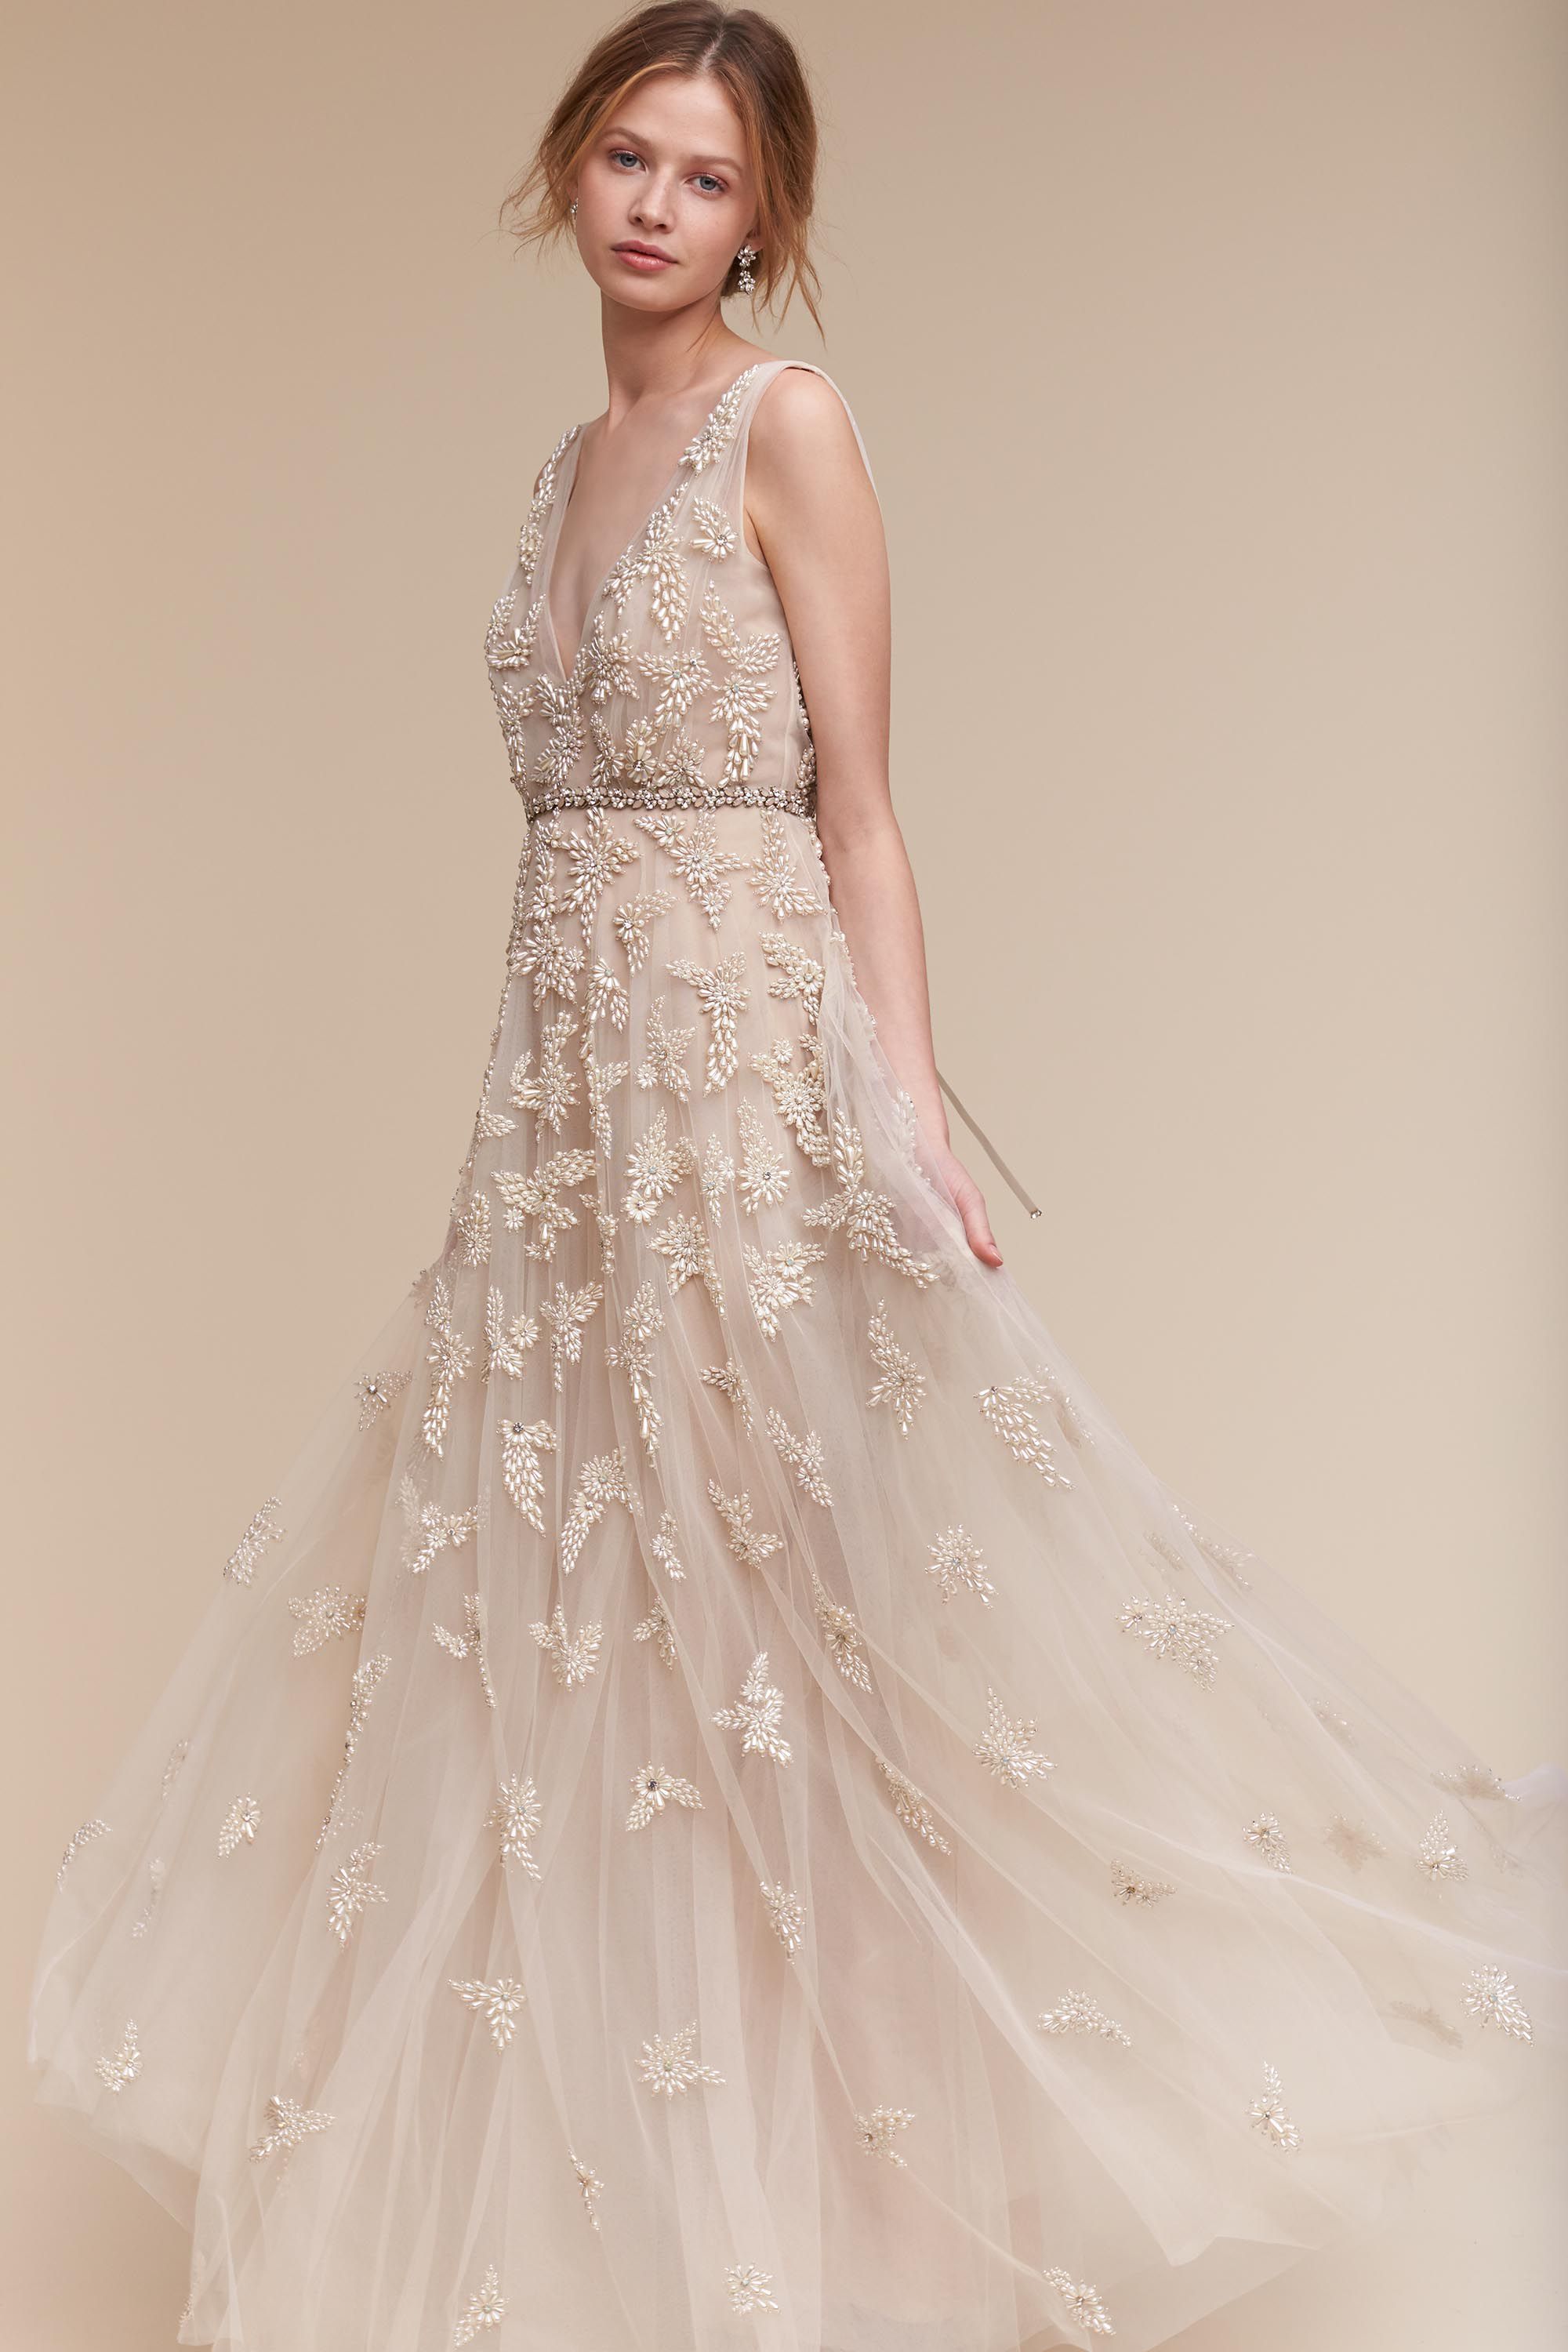 Dreamy BHLDN Wedding Dresses - Kai Gown